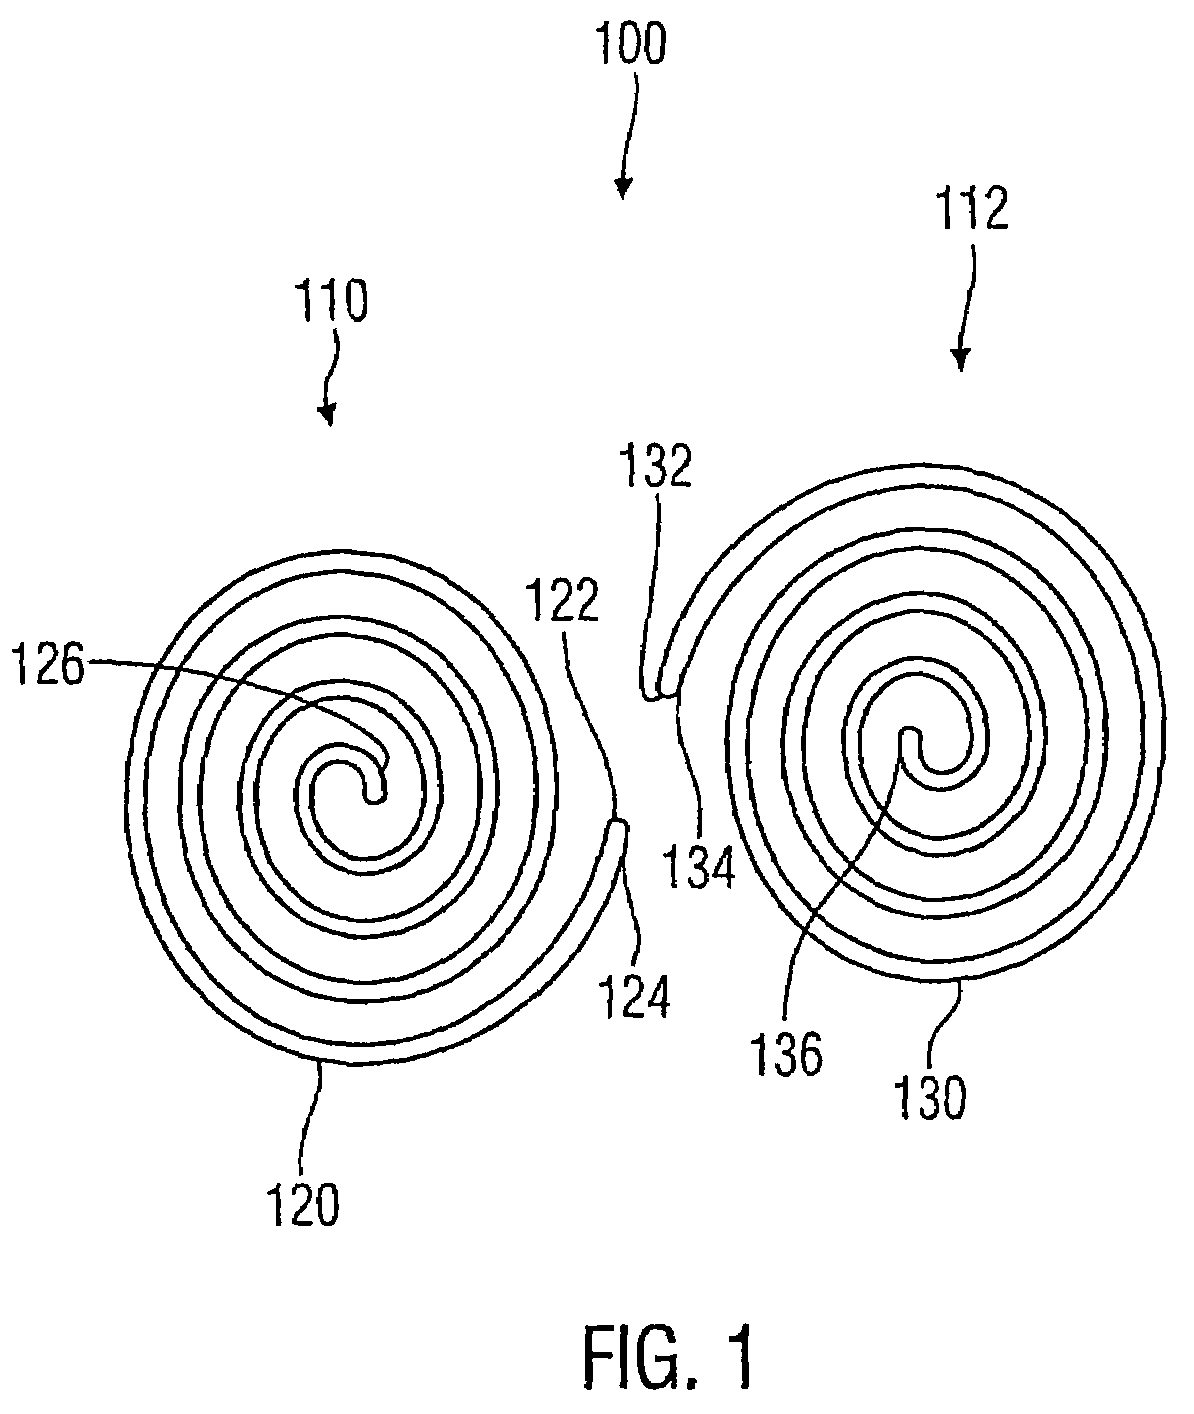 Double spiral antenna